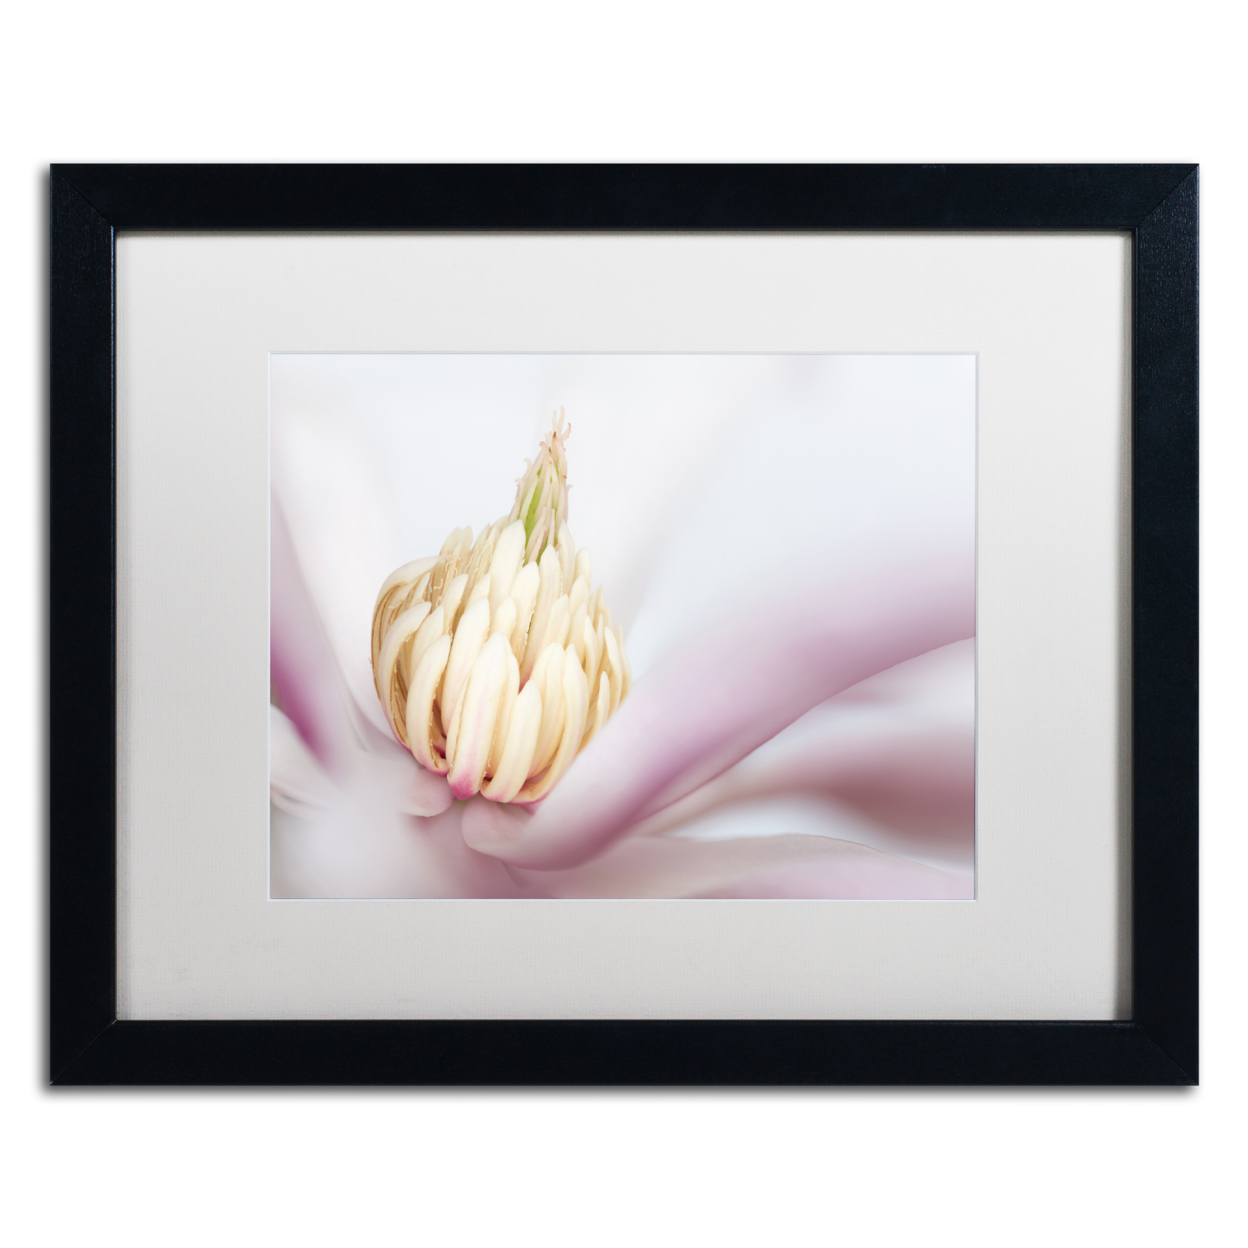 Pierre Leclerc 'Soft Magnolia' Black Wooden Framed Art 18 X 22 Inches